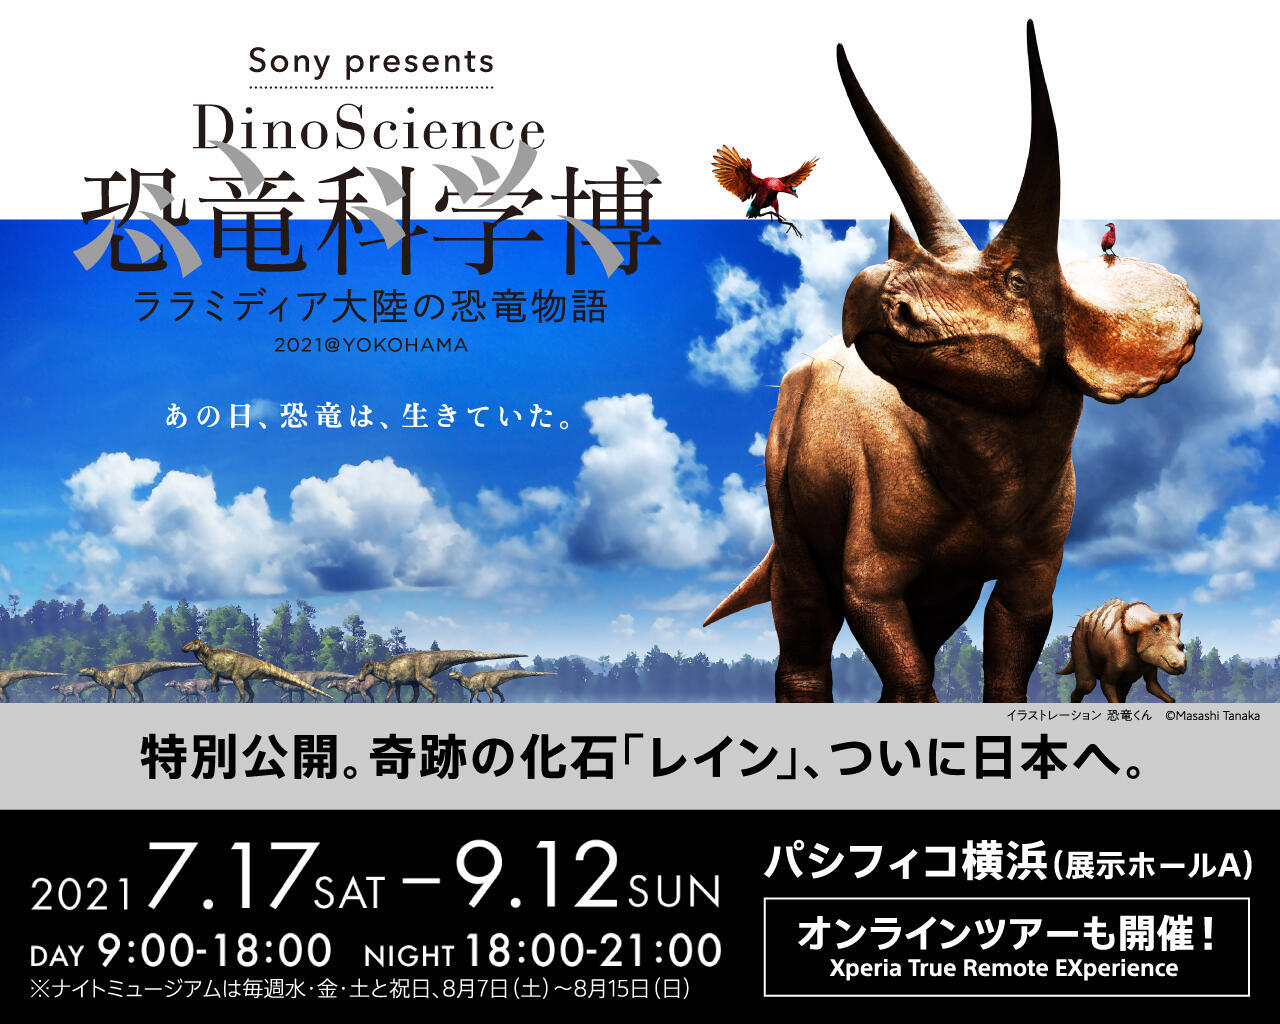 「Sony presents DinoScience 恐竜科学博 ～ララミディア大陸の恐竜物語～ 2021＠YOKOHAMA」 開催